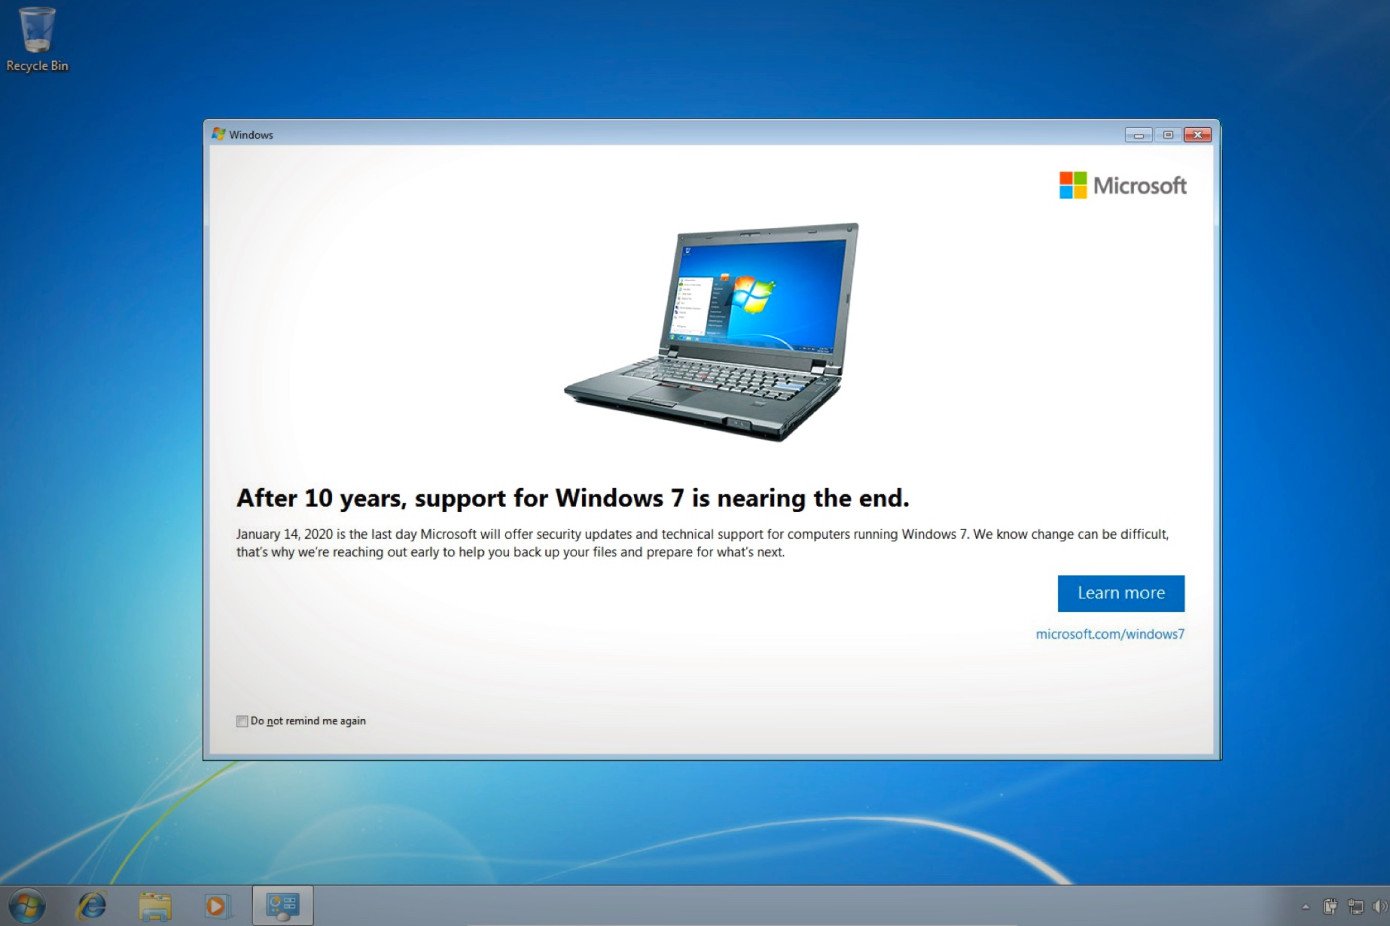 windows-7-support-nearing-end-credit-techcrunch.jpg